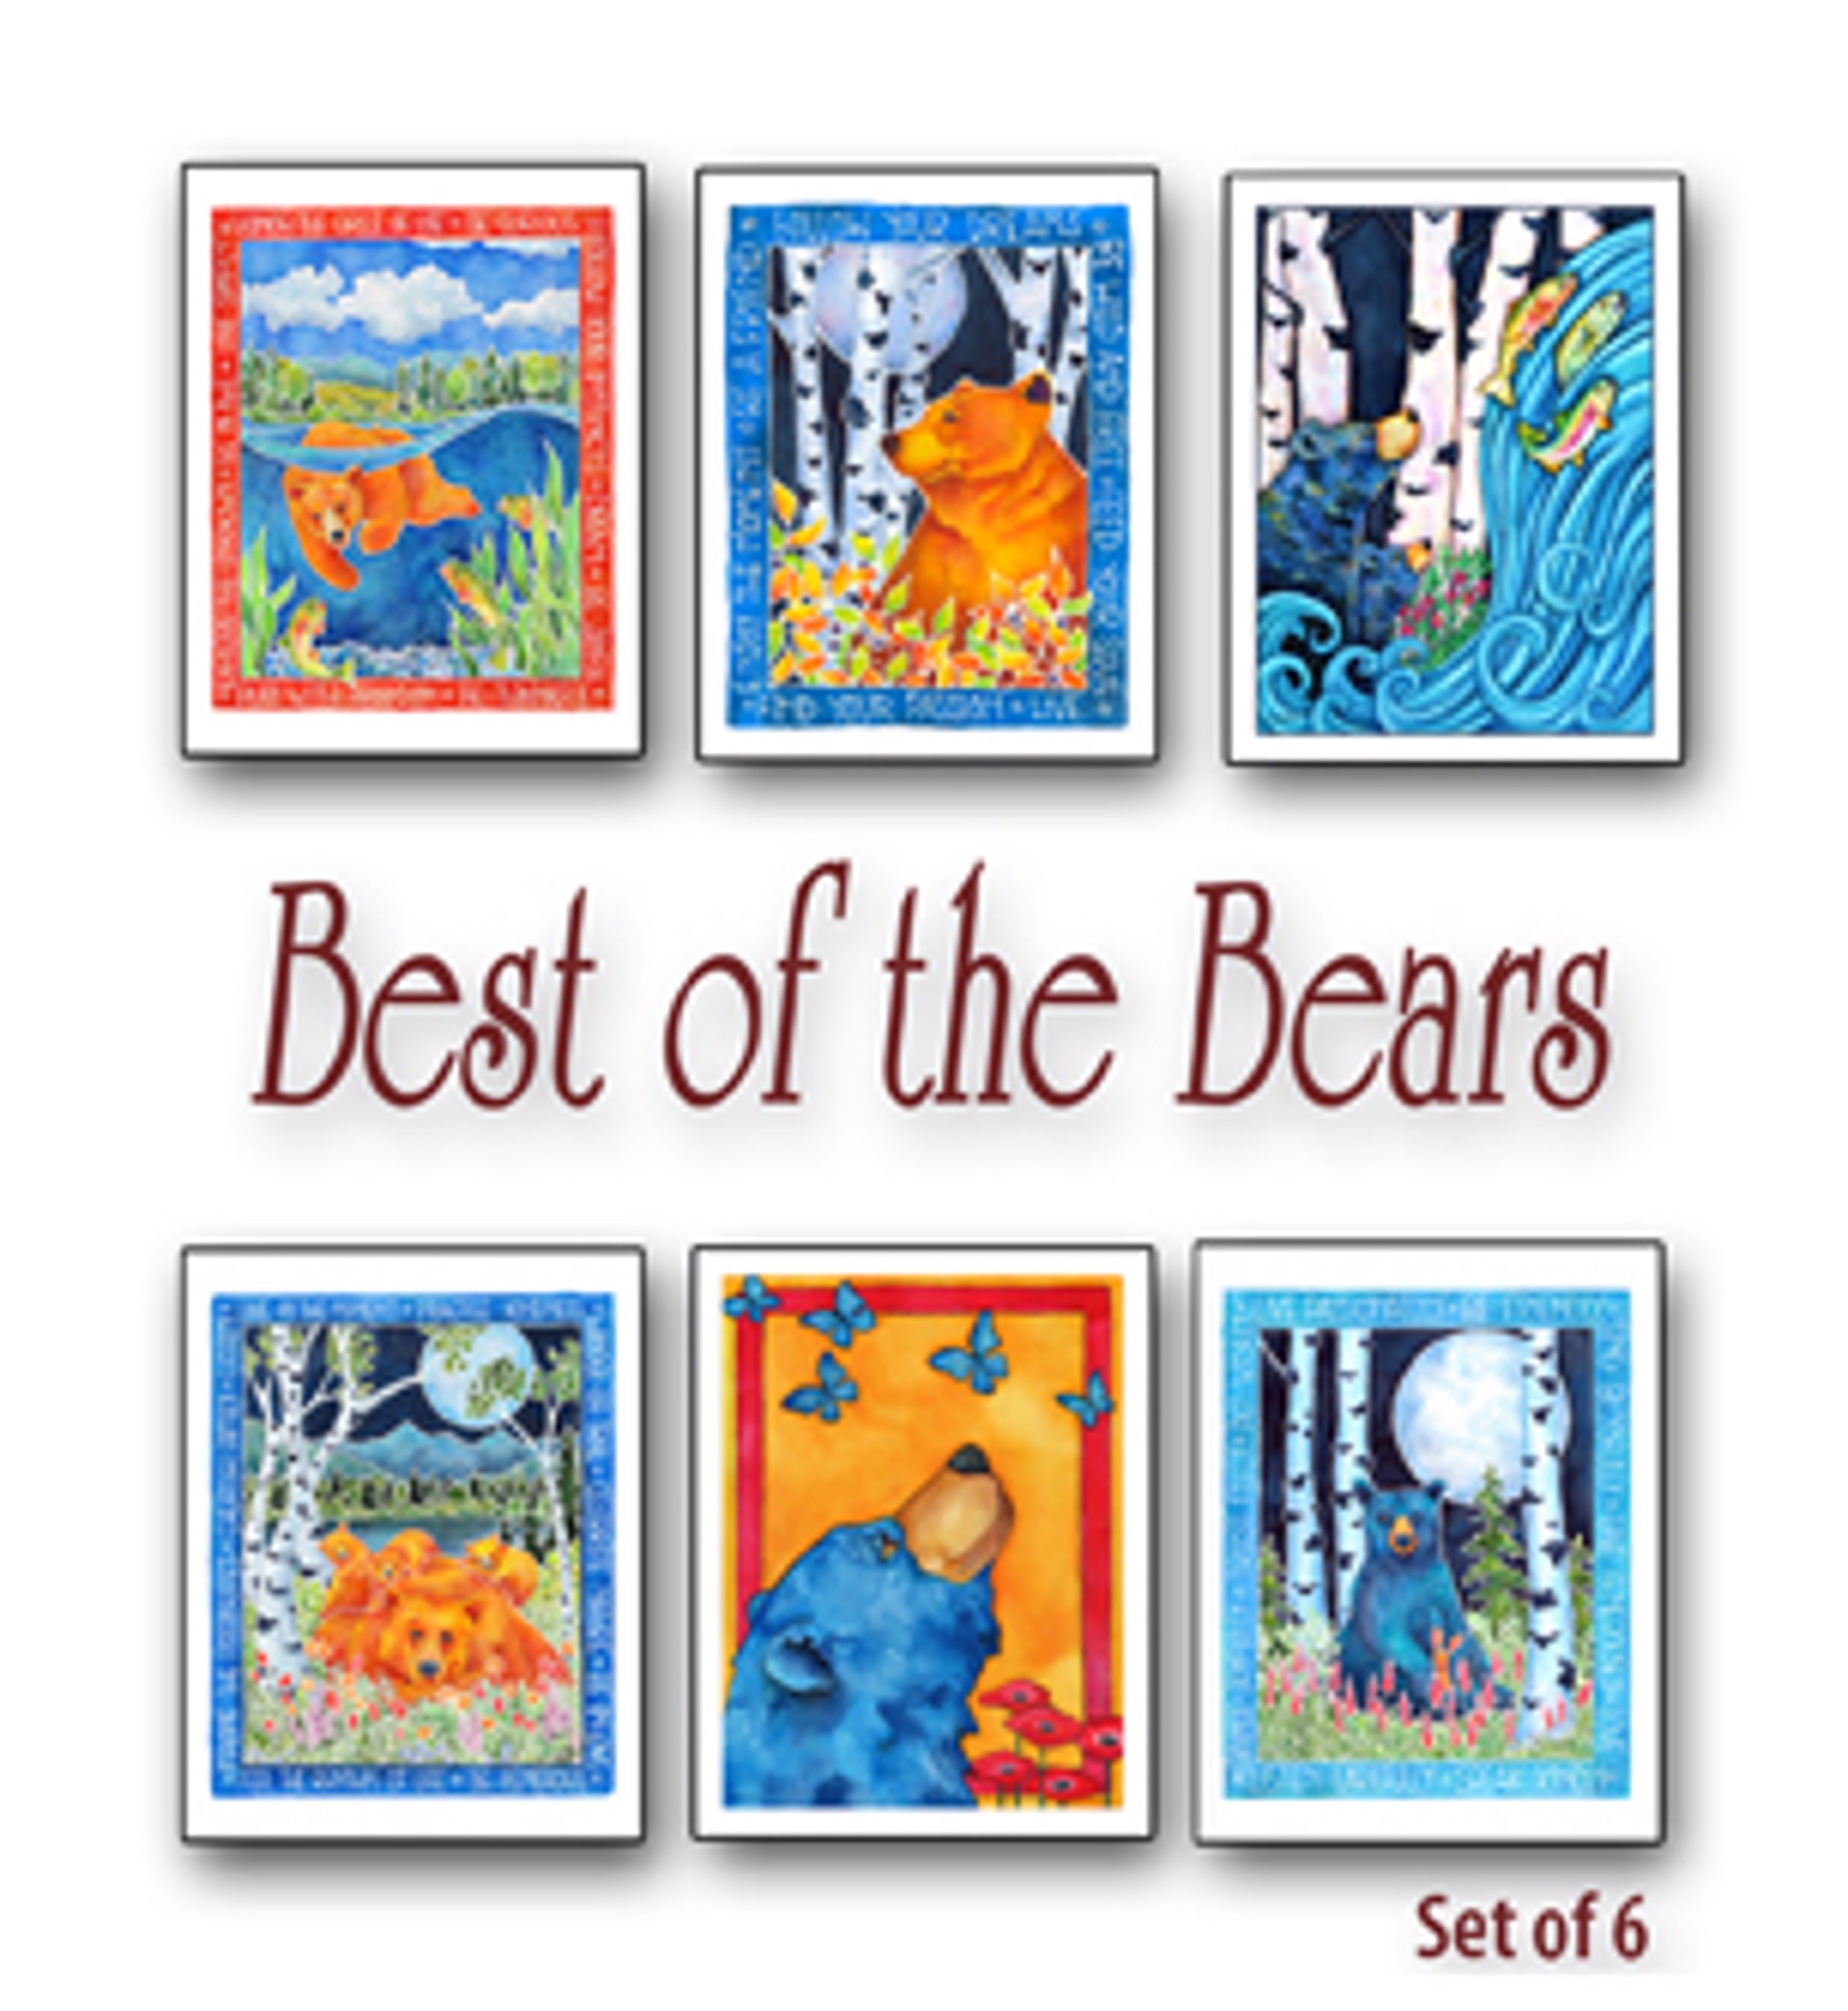 Best of the Bears Art Card Pack by Karen Savory